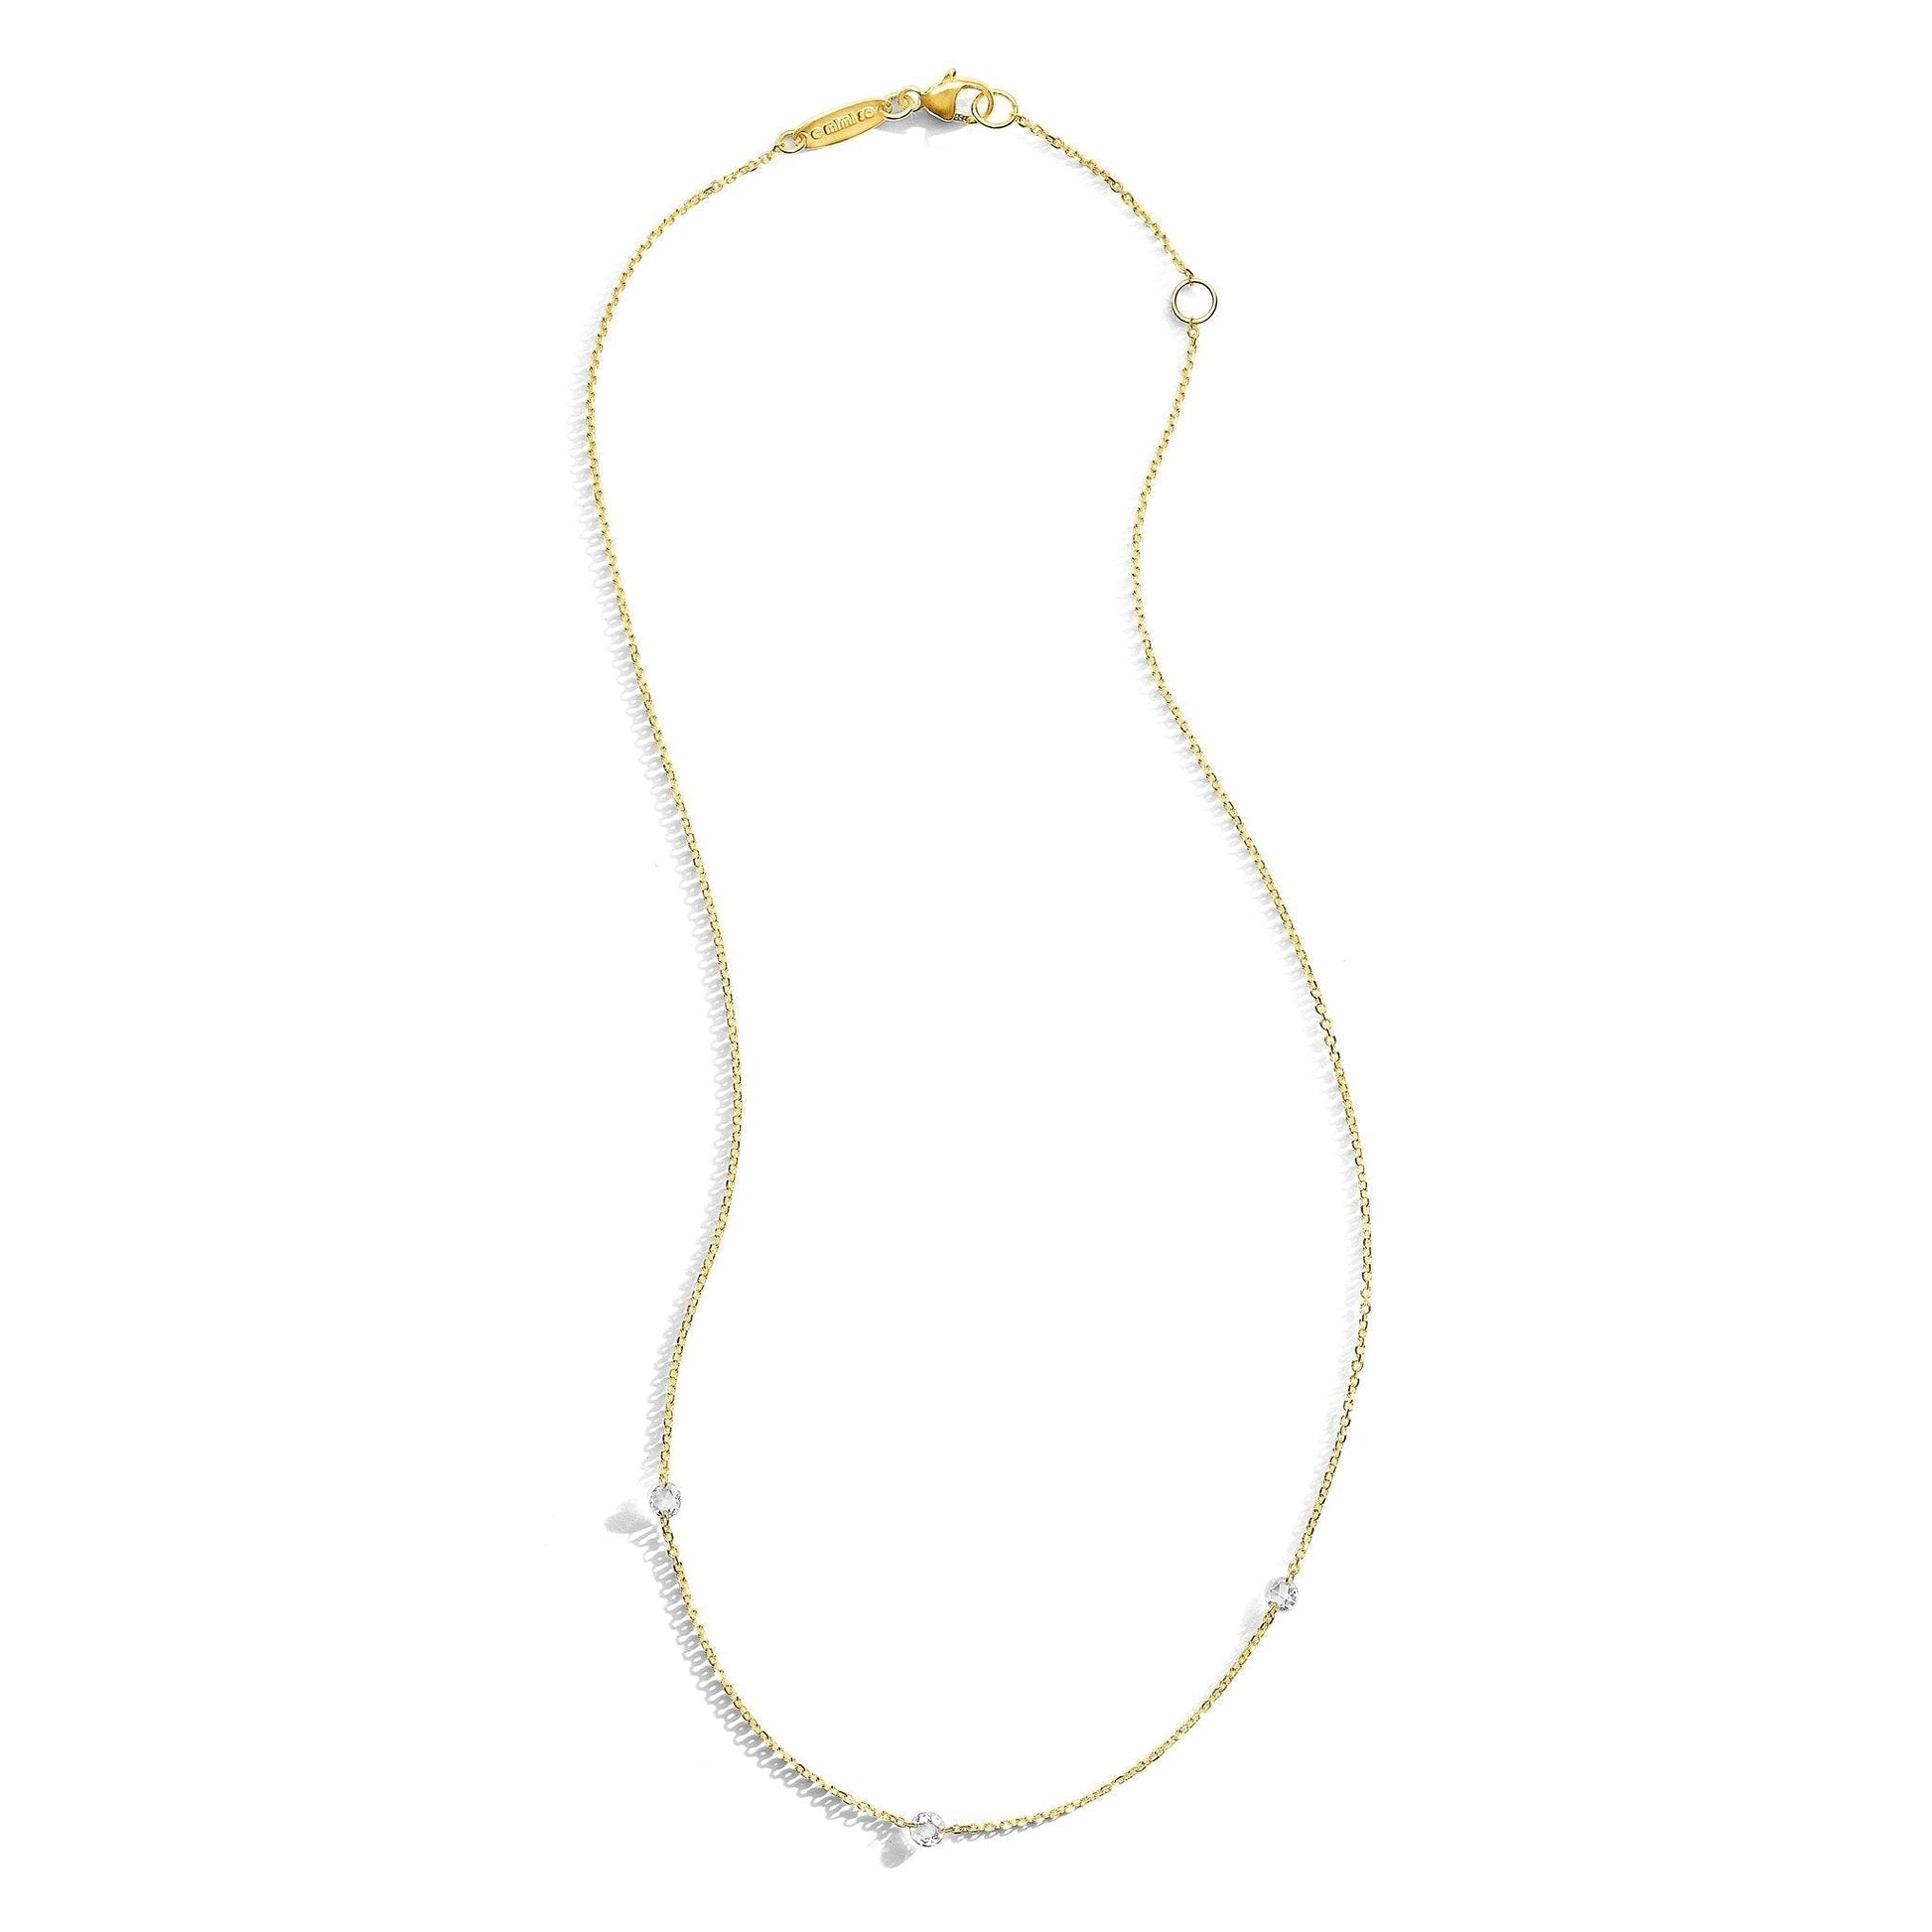 Mimi-Rosette-Necklaces-3-Stones_18k Yellow Gold